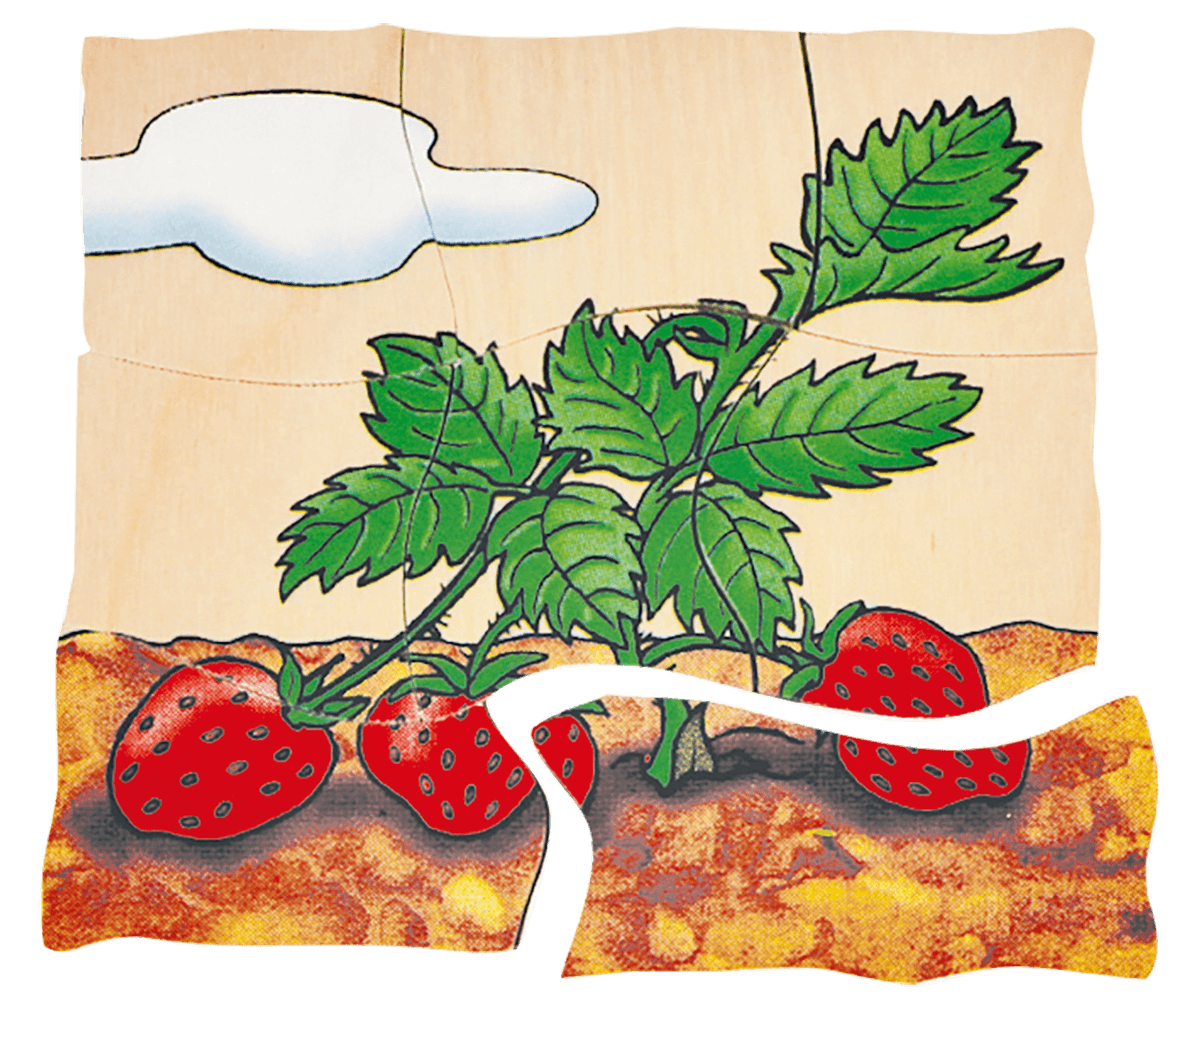 Beleduc Layer-Puzzle Strawberry Growing 草莓生長多層情景找找看拼圖